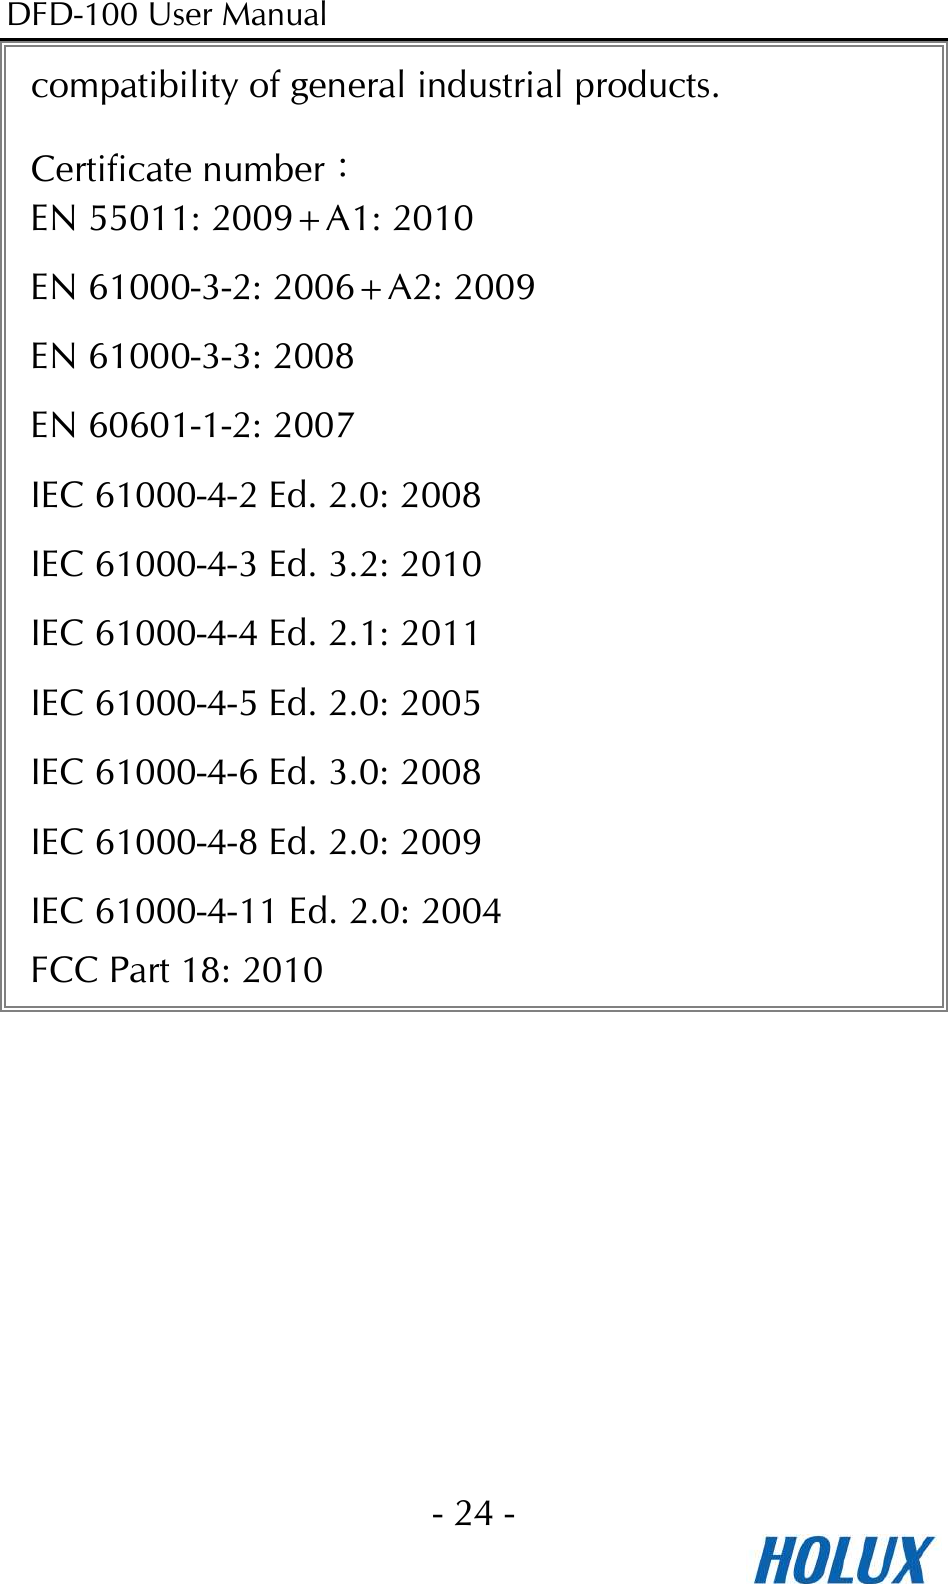 DFD-100 User Manual - 24 -  compatibility of general industrial products. Certificate number： EN 55011: 2009+A1: 2010 EN 61000-3-2: 2006+A2: 2009 EN 61000-3-3: 2008 EN 60601-1-2: 2007 IEC 61000-4-2 Ed. 2.0: 2008 IEC 61000-4-3 Ed. 3.2: 2010 IEC 61000-4-4 Ed. 2.1: 2011 IEC 61000-4-5 Ed. 2.0: 2005 IEC 61000-4-6 Ed. 3.0: 2008 IEC 61000-4-8 Ed. 2.0: 2009 IEC 61000-4-11 Ed. 2.0: 2004 FCC Part 18: 2010  